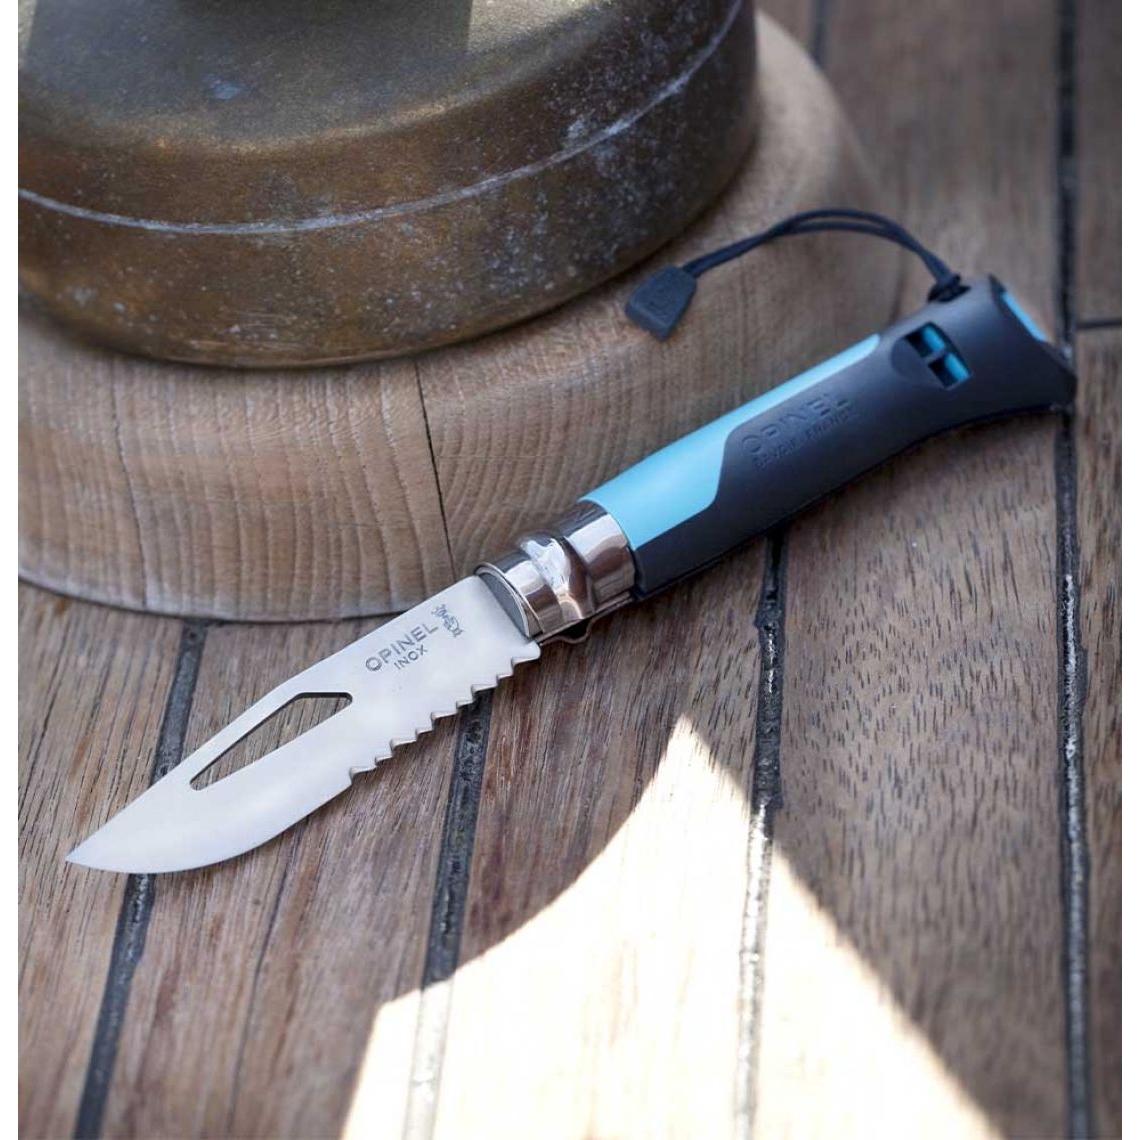 Opinel Couteau Pliant No 08 Outdoor - inoxydable - blue/grey - BIKE24